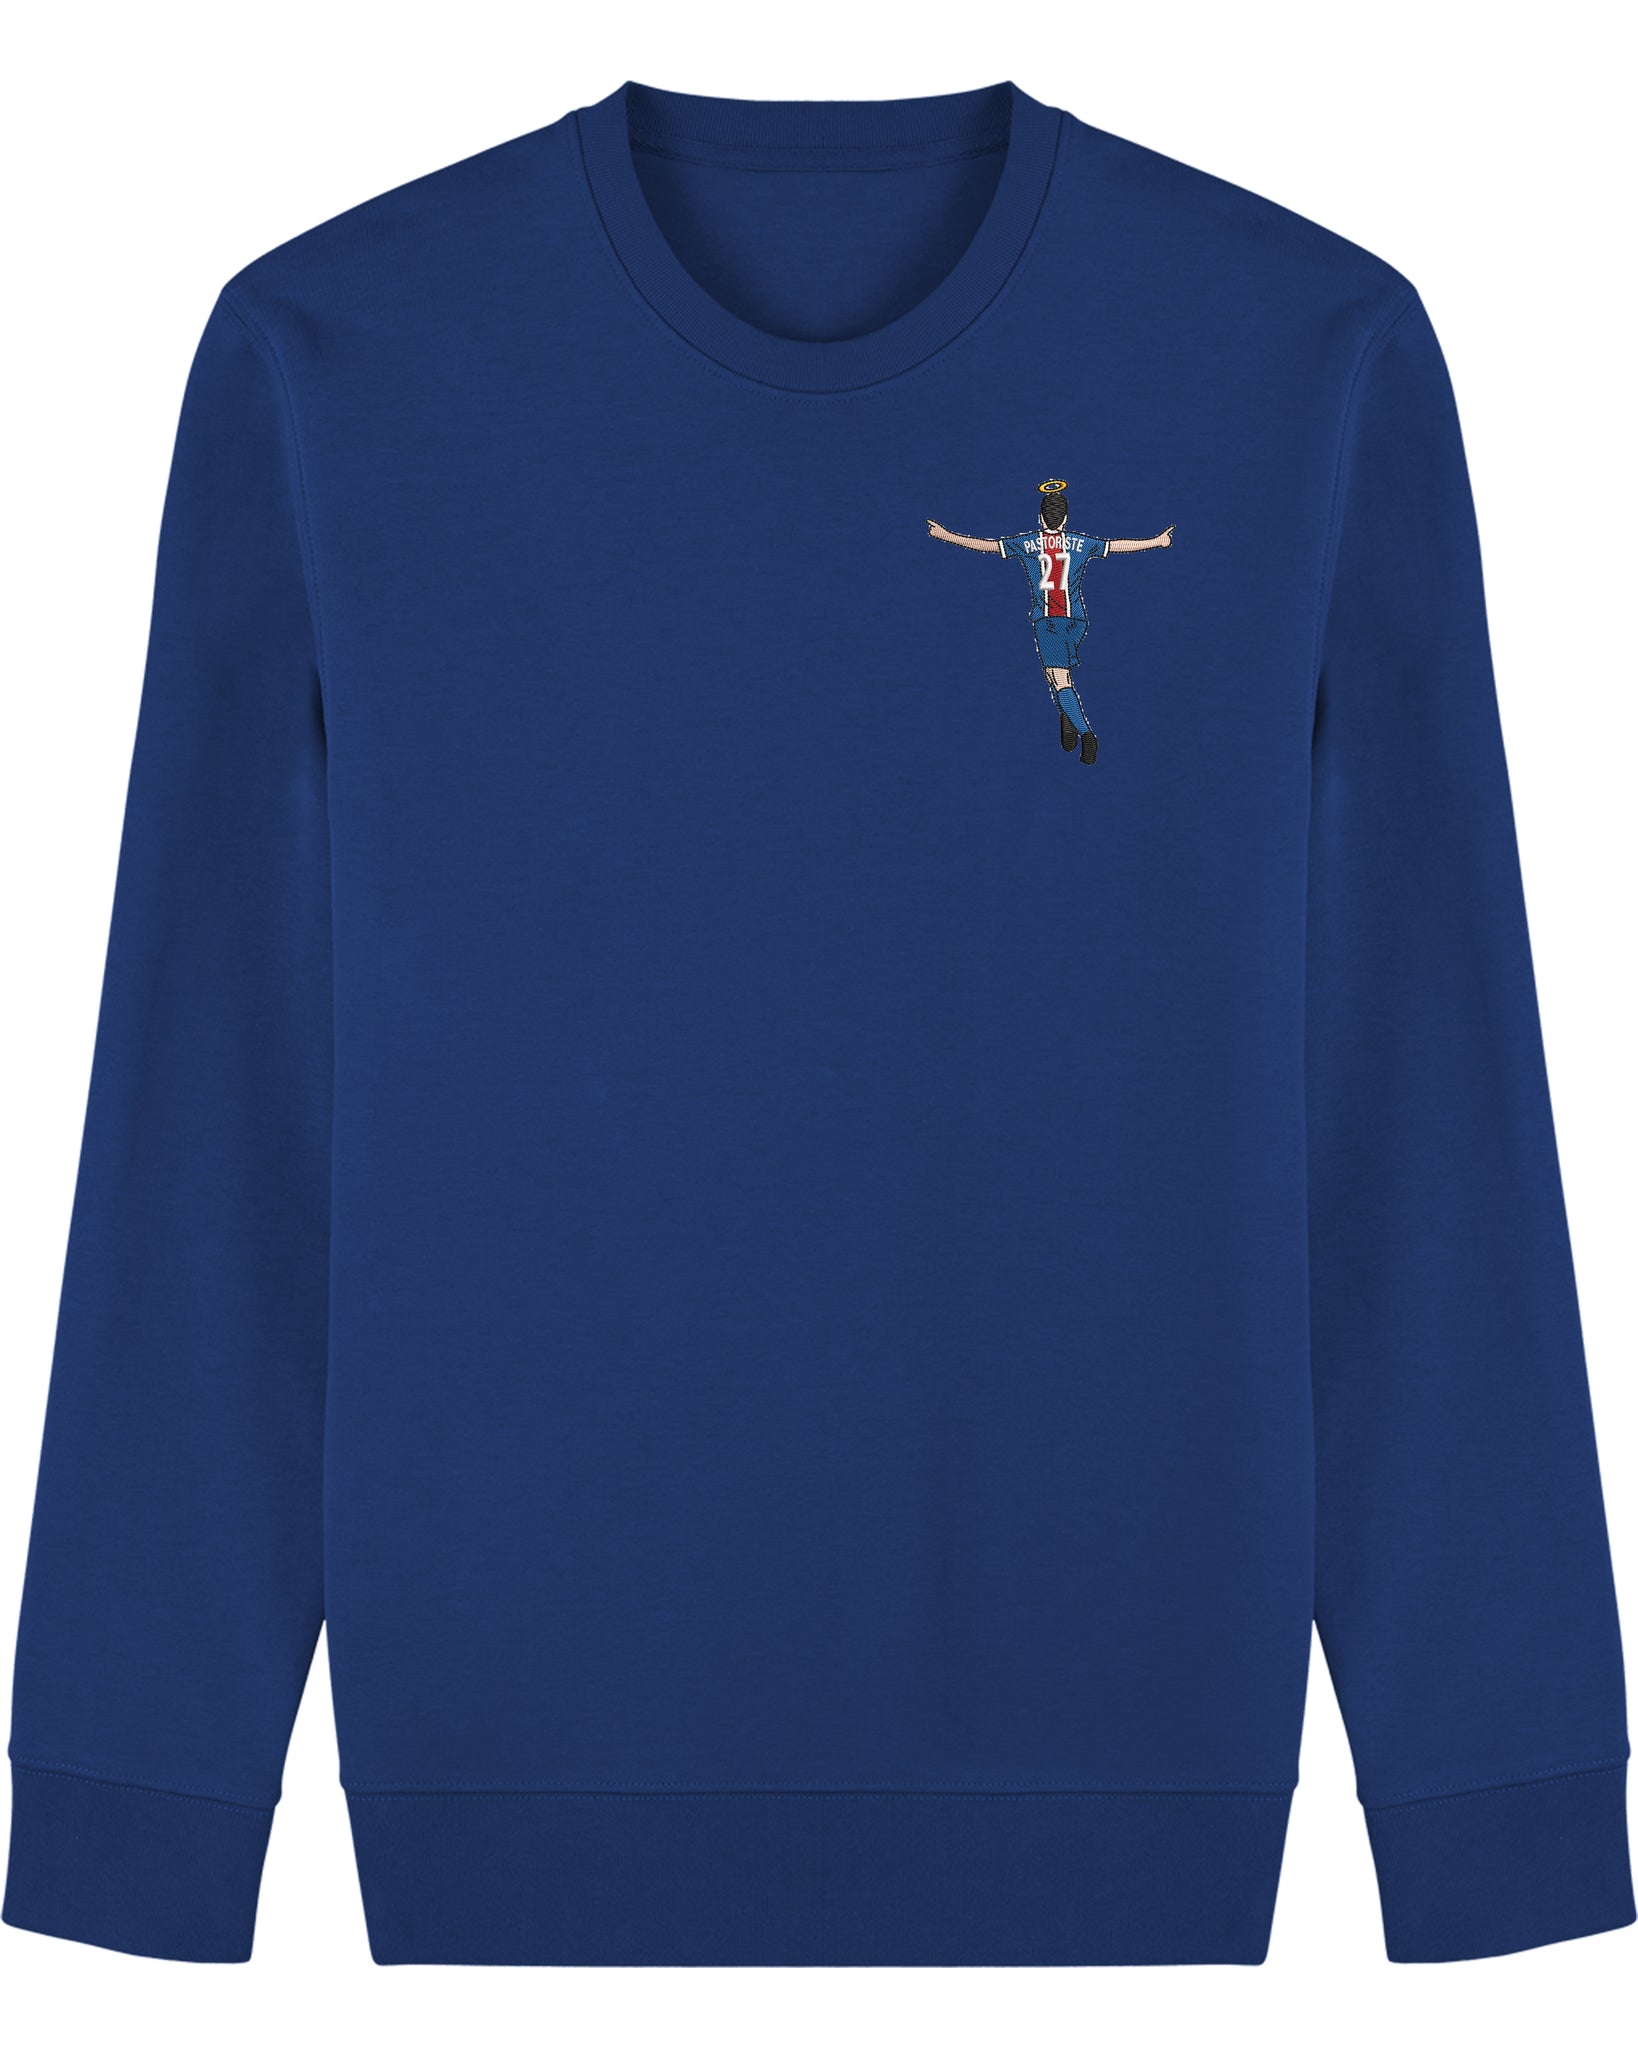 Embroidered Pastorist Sweatshirt